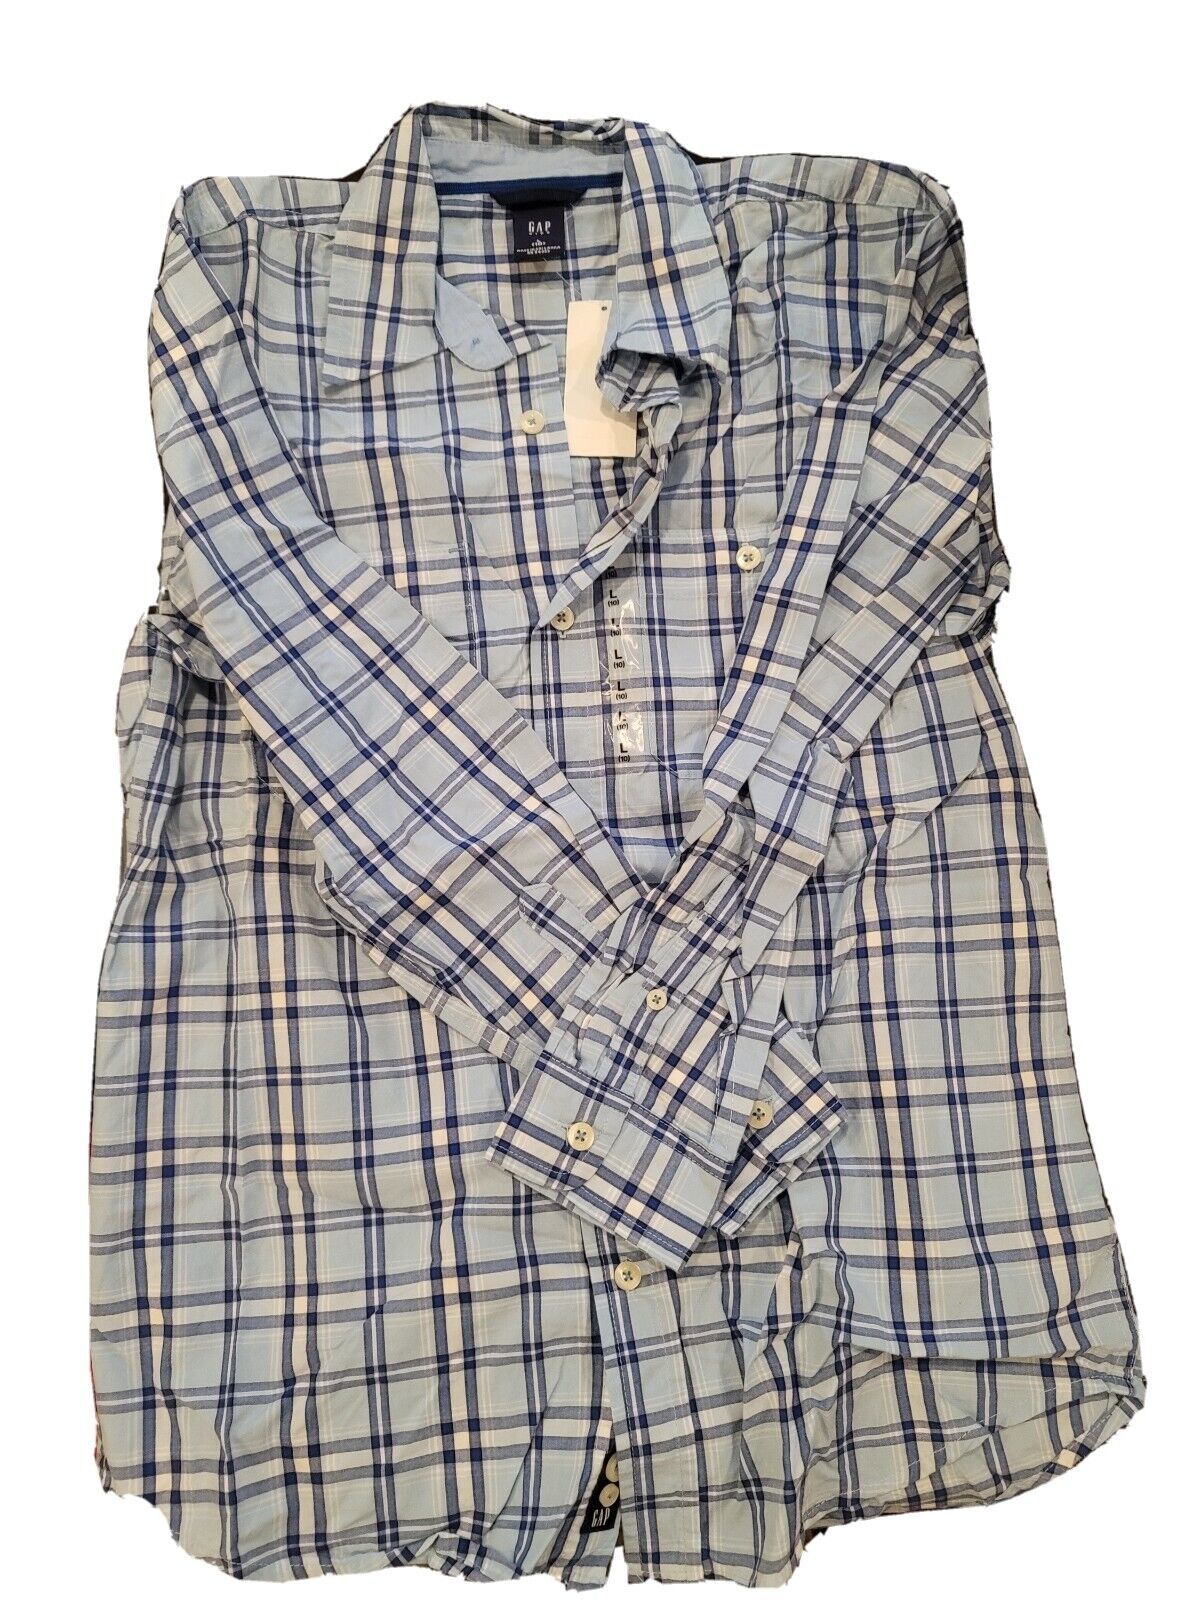 NWT New With Tags GAP Boy's Blue Plaid Long Sleeve Dress Shirt Size L (10) - $30.00